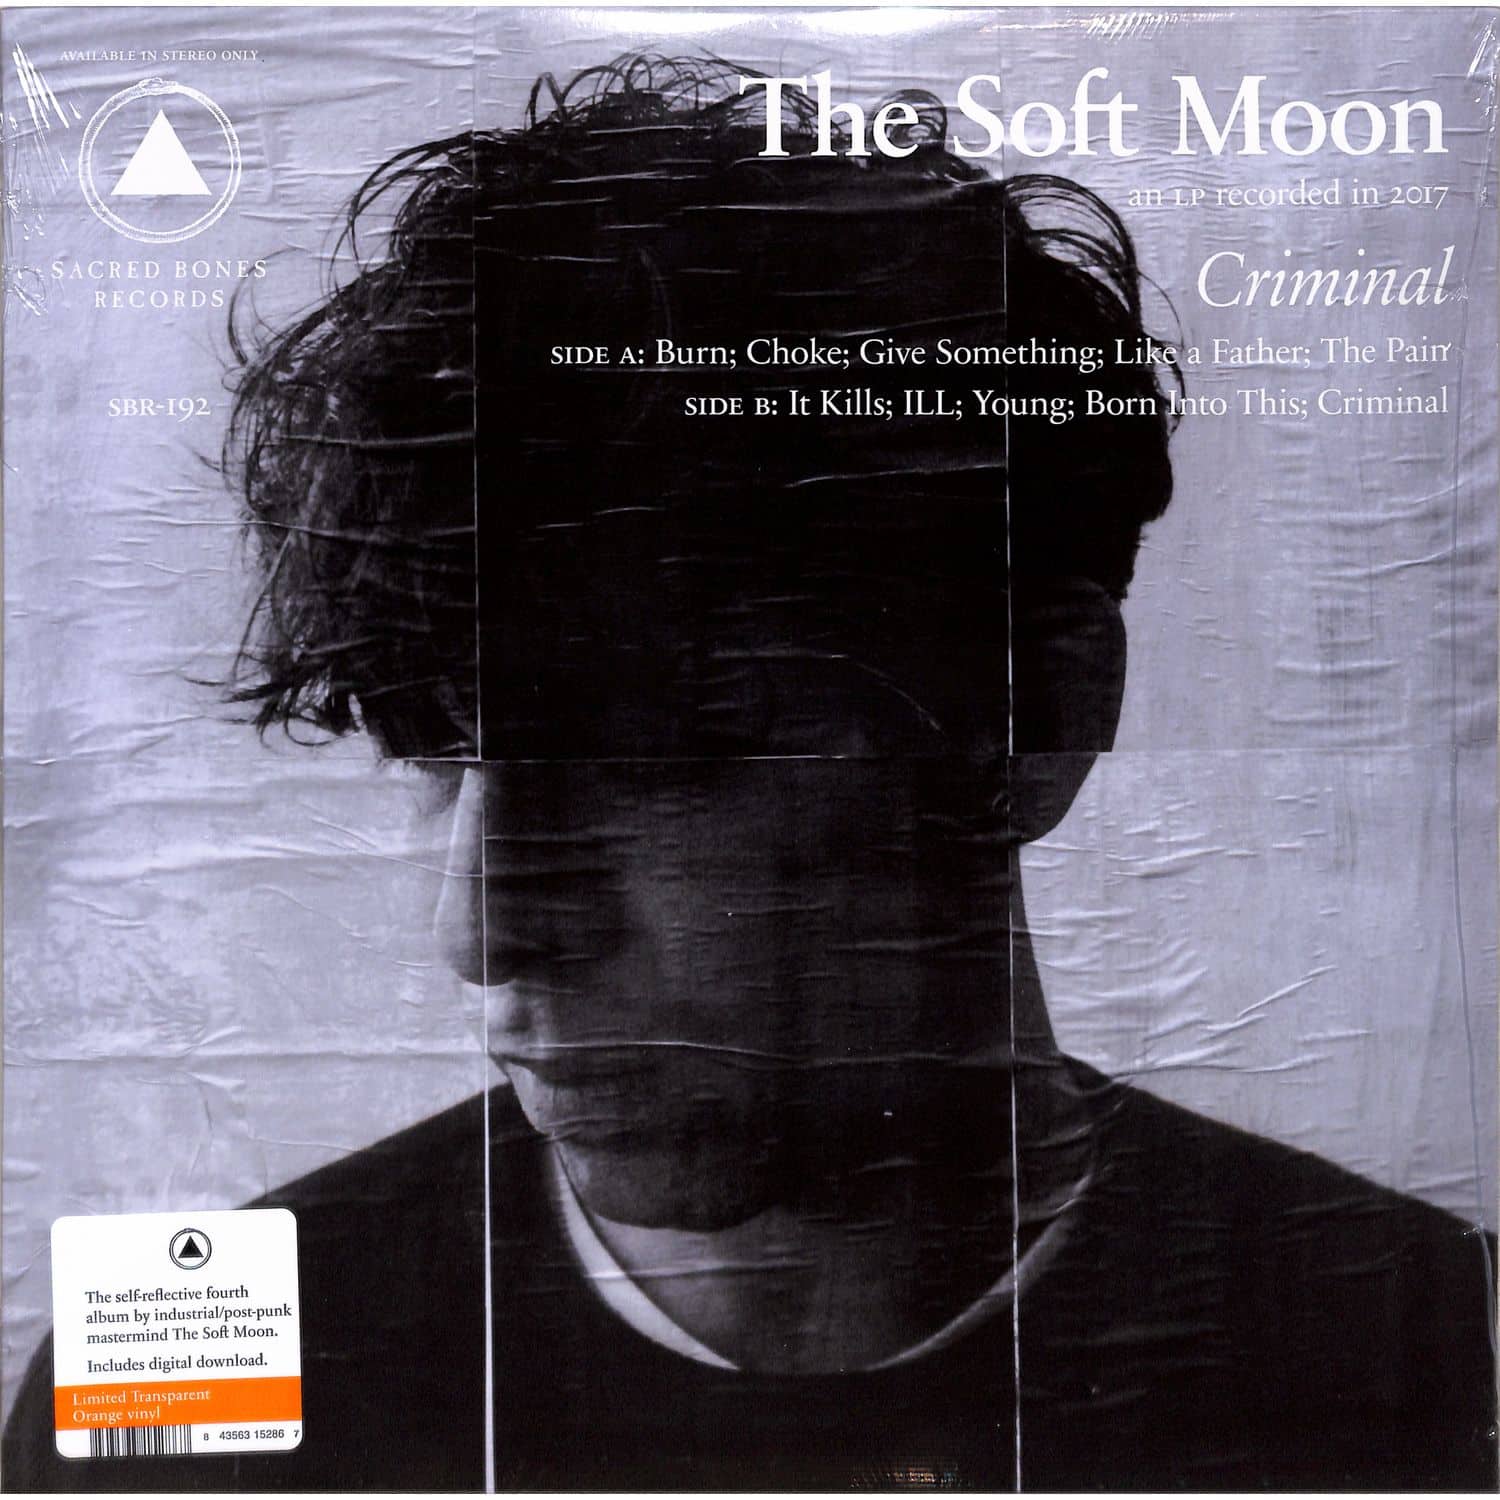 The Soft Moon - CRIMINAL 